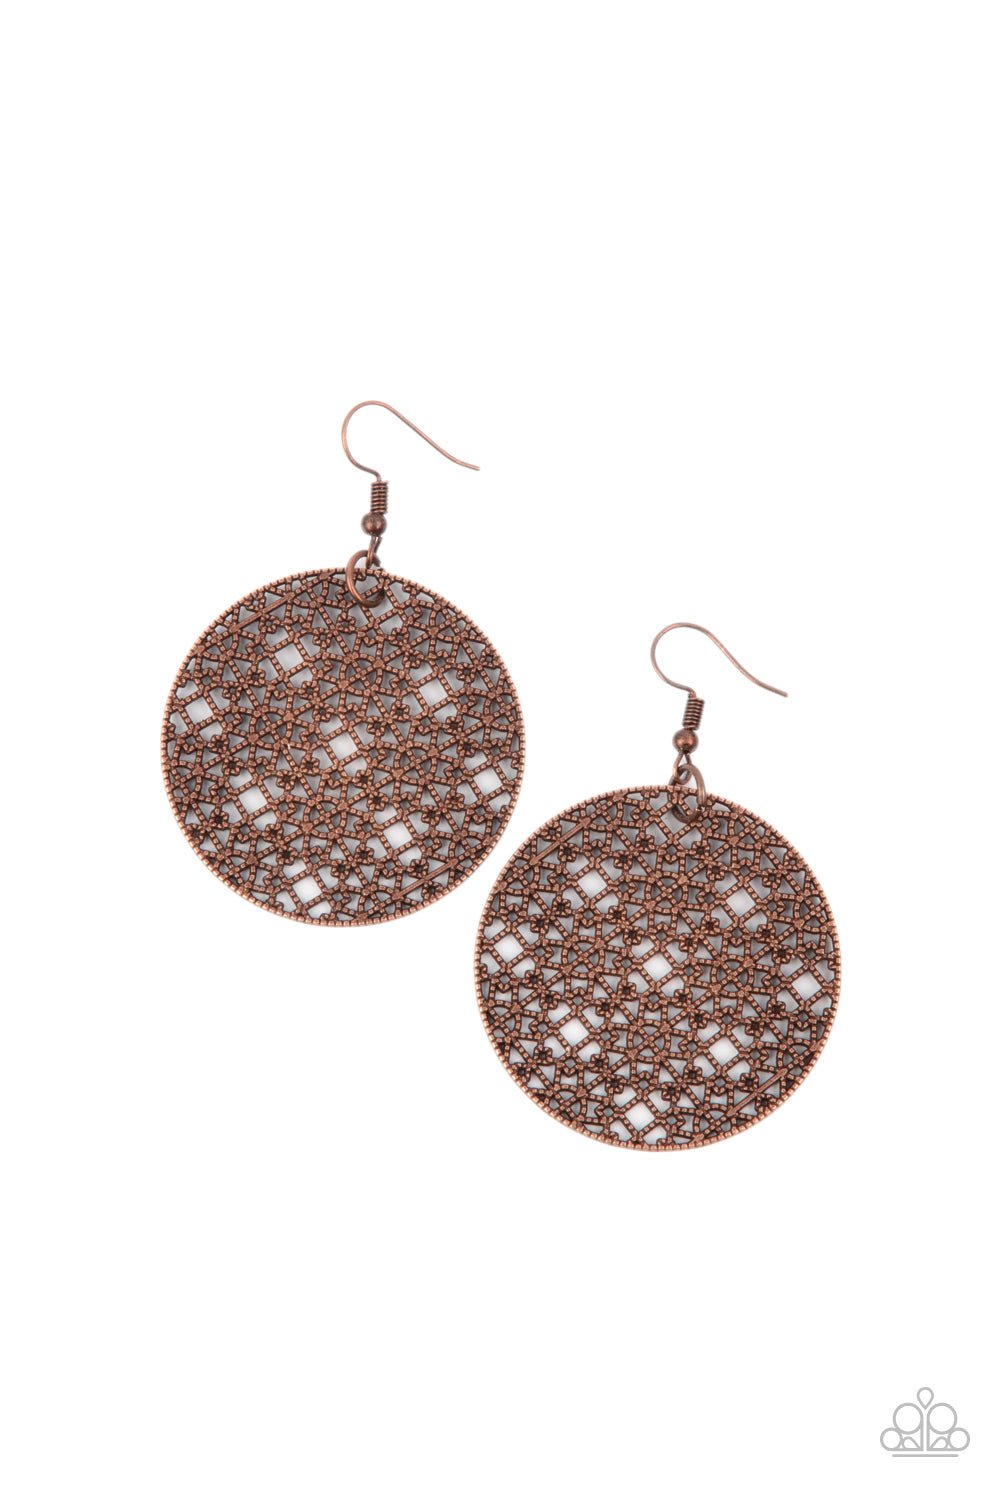 Metallic Mosaic - Copper Earrings - Princess Glam Shop